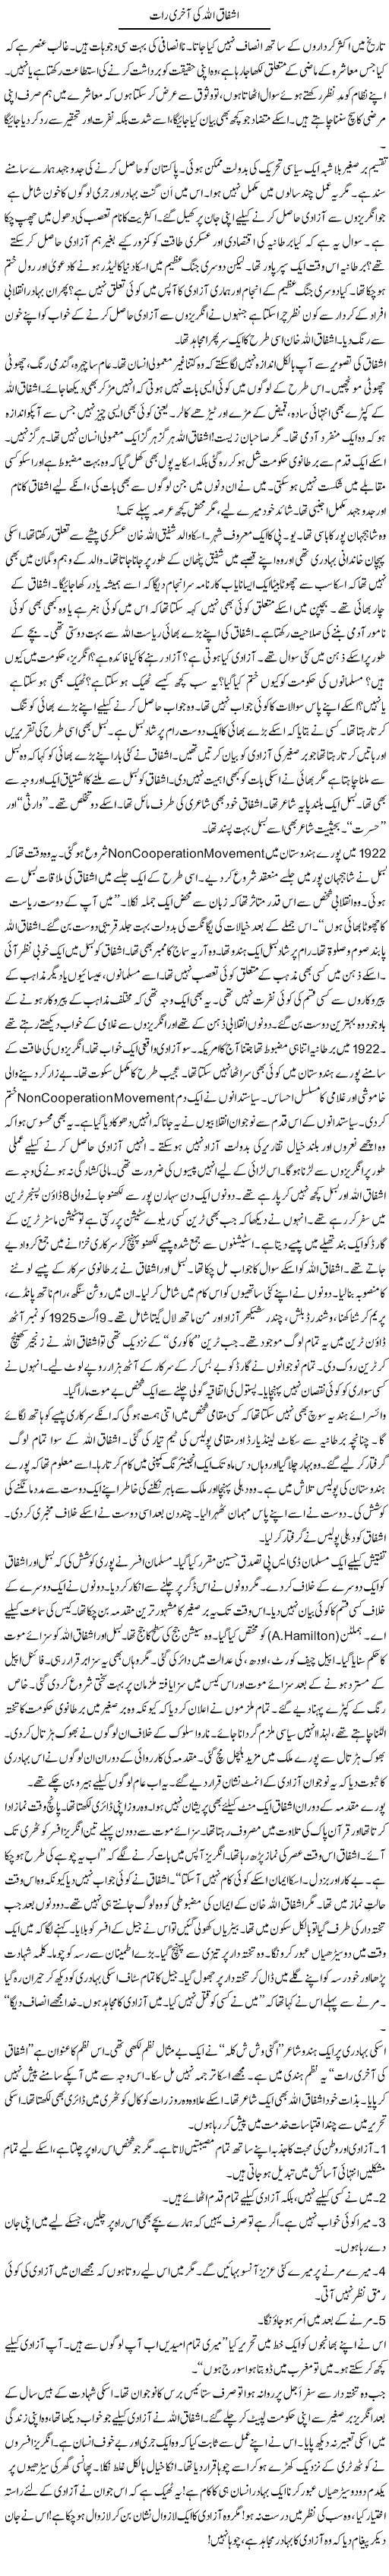 Ashfaq Allah Ki Aakhri Raat | Rao Manzar Hayat | Daily Urdu Columns